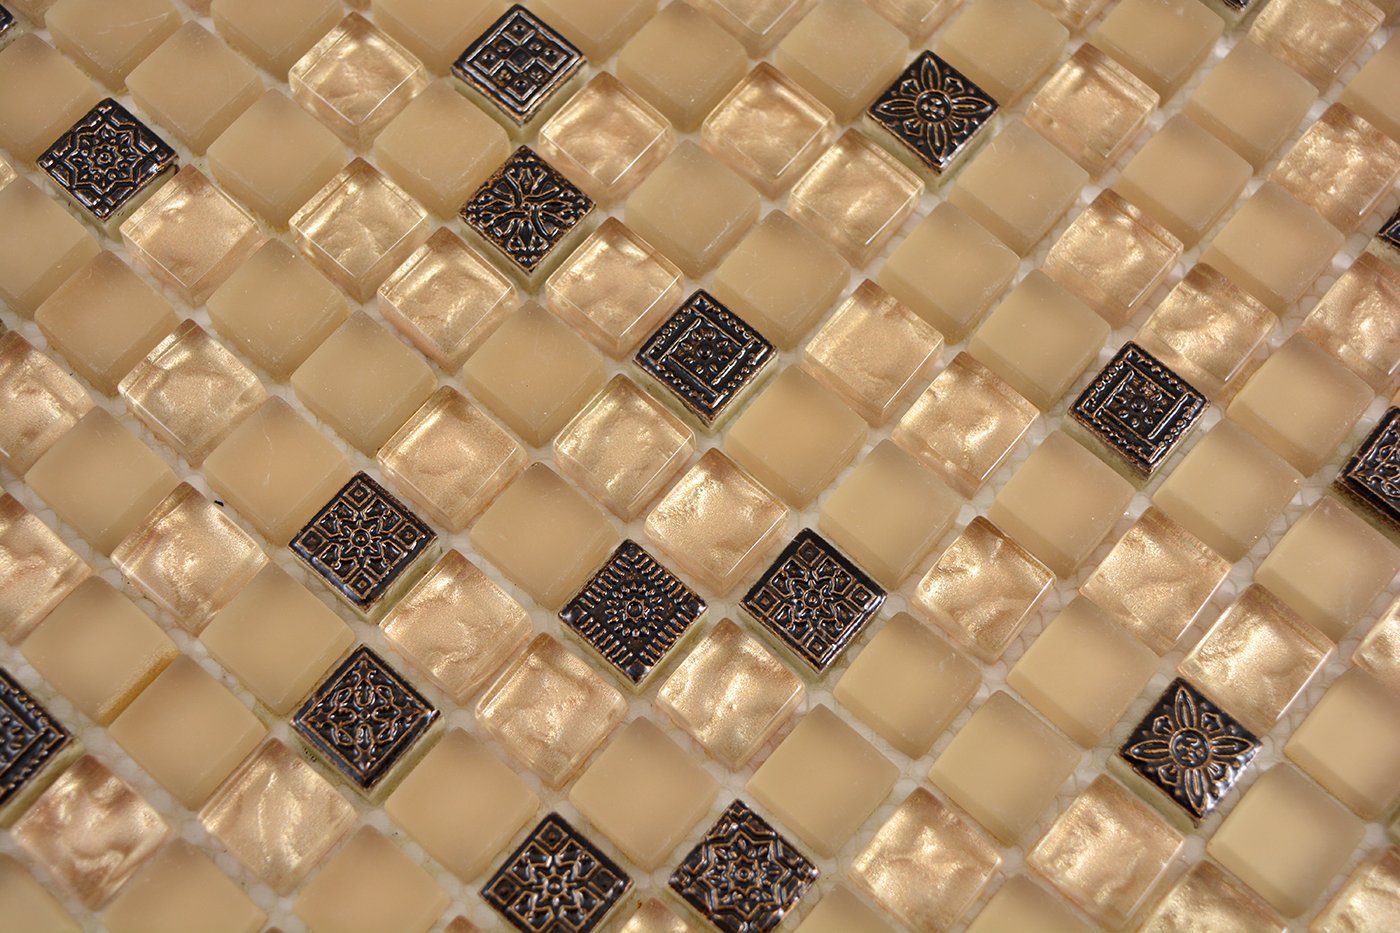 Mosani Mosaikfliesen 10 glänzend / beige Resin Glasmosaik Mosaik Matten